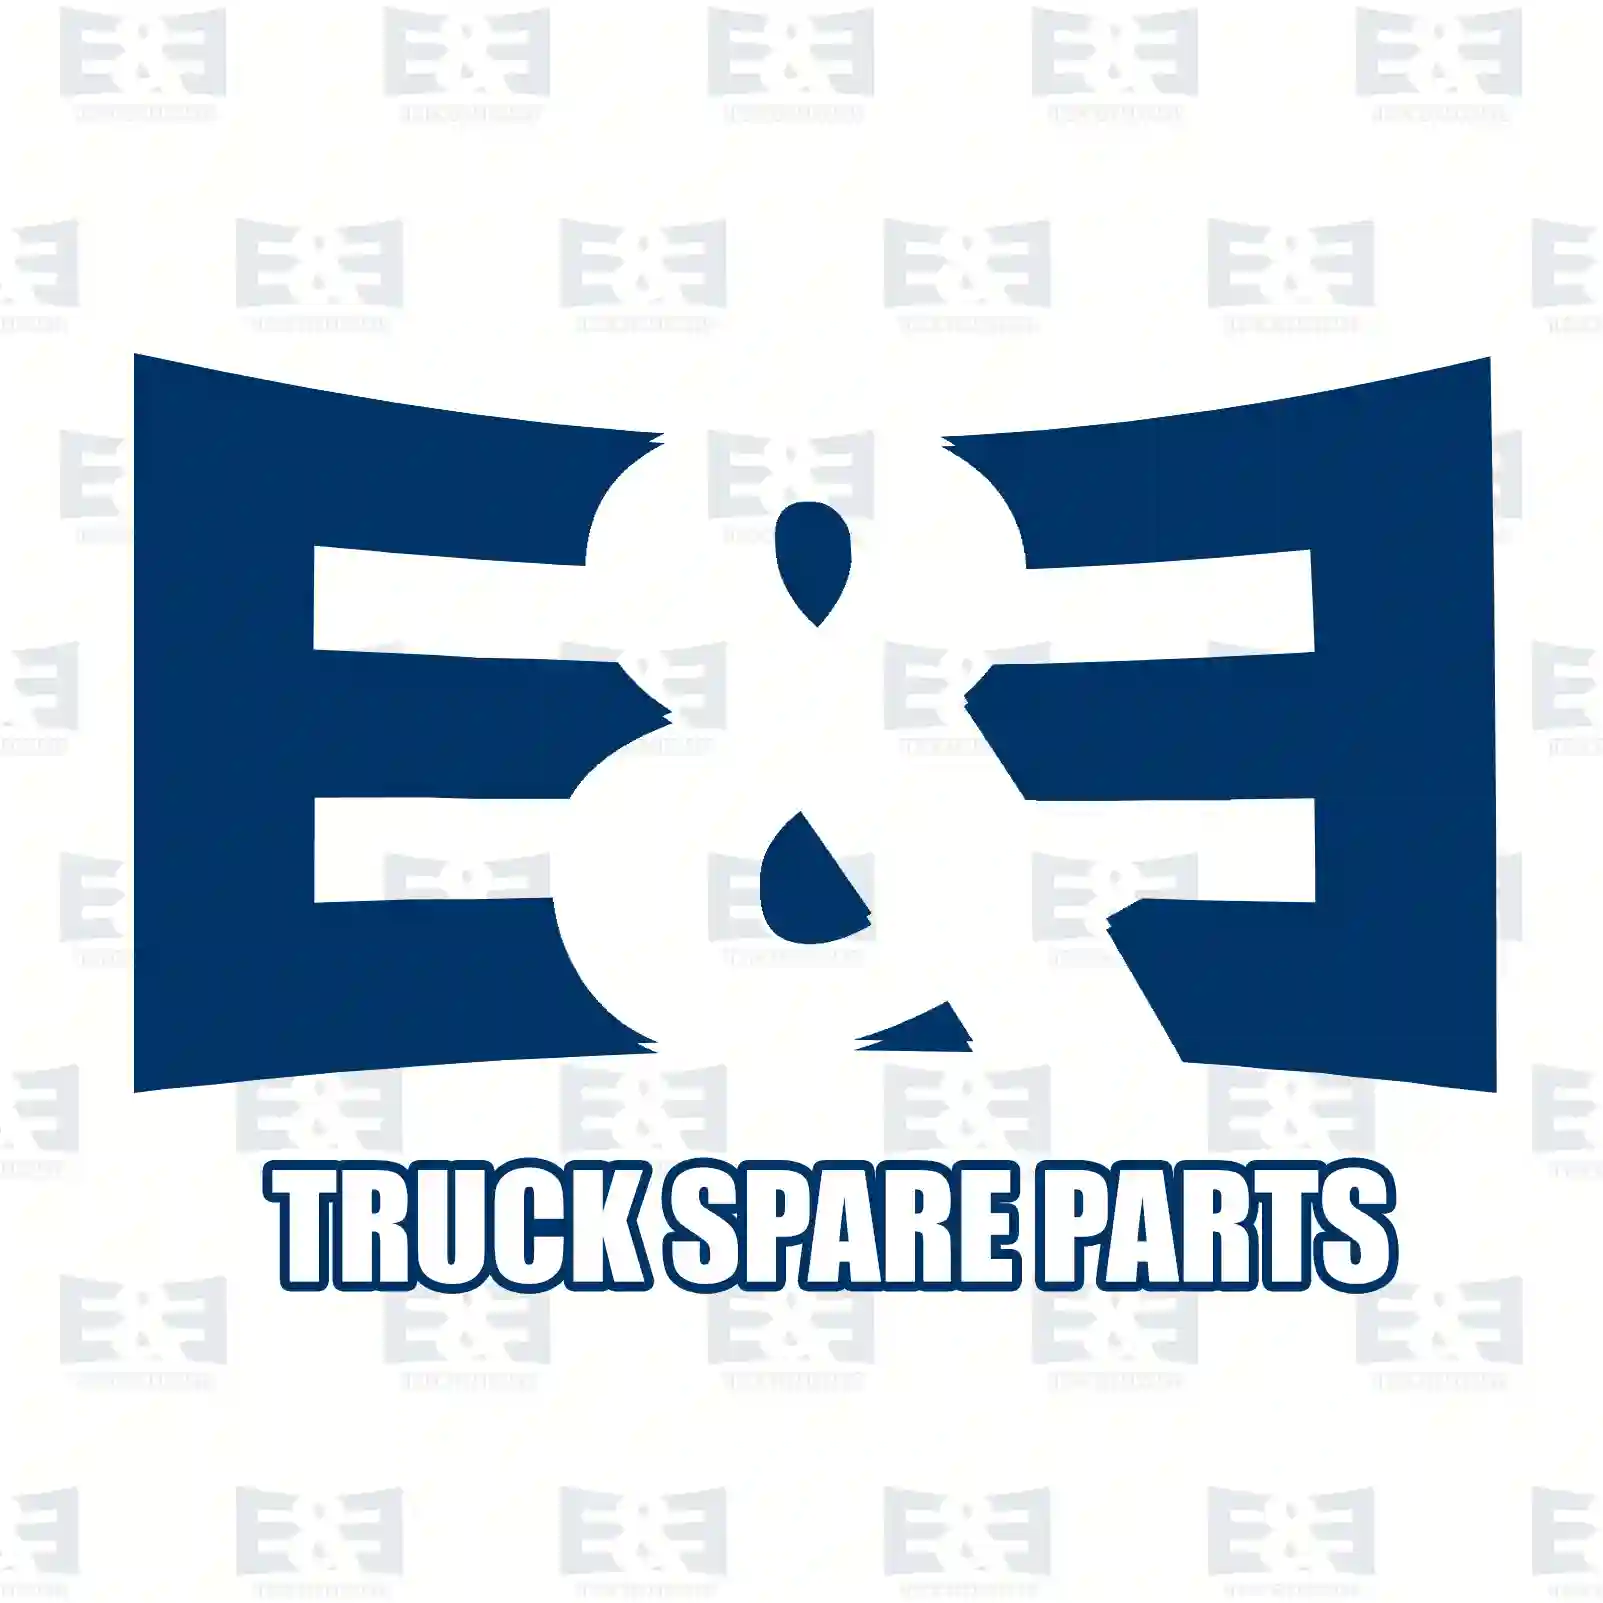 Gearbox Unit Ball, EE No 2E2279461 ,  oem no:0221214, 221214, 01116953, 08870249, 09005026, 09009108, 1116953, 8870249, 9005026, 9009108, 06316300317, 0054013060, 005401306000, 32016, 1521241, 190288, ZG40184-0008 E&E Truck Spare Parts | Truck Spare Parts, Auotomotive Spare Parts